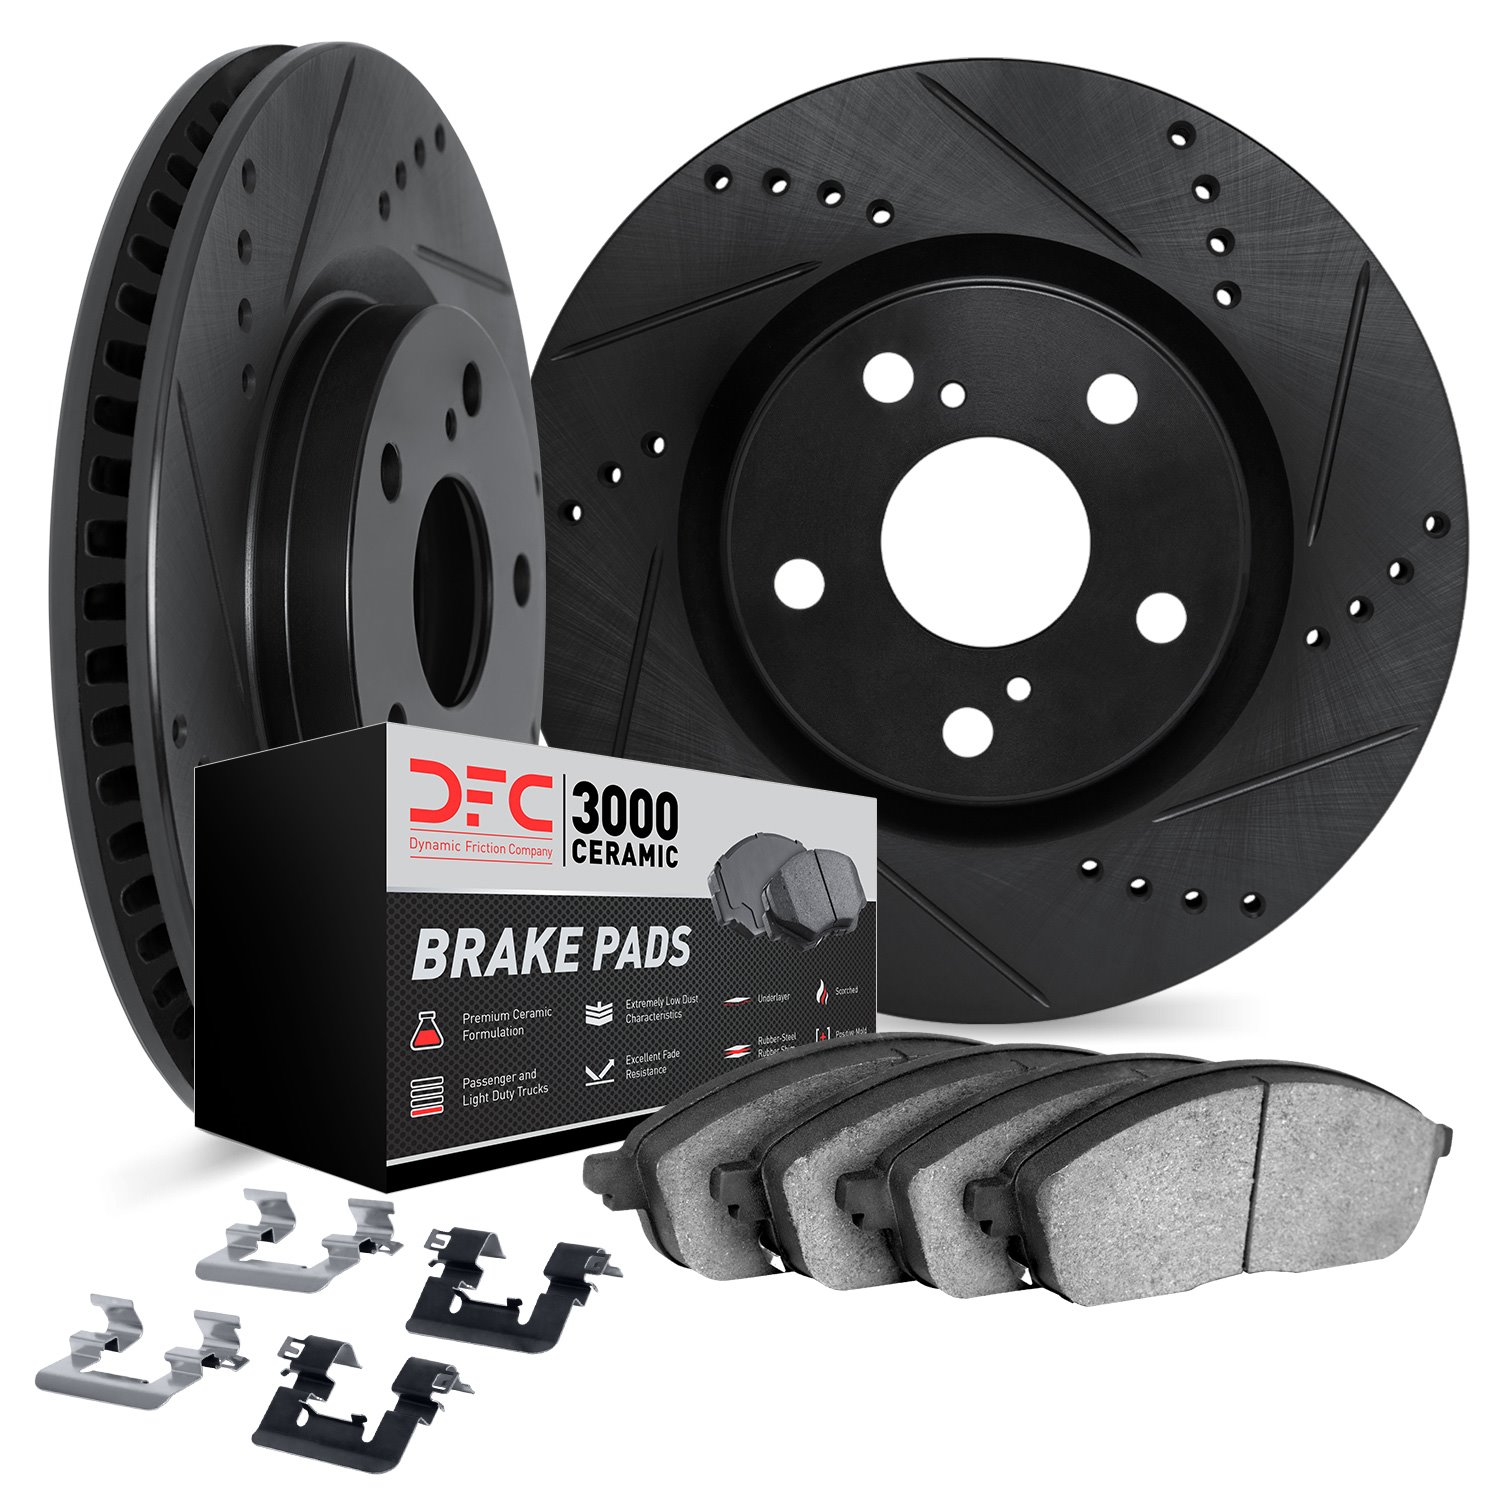 8312-58027 Drilled/Slotted Brake Rotors with 3000-Series Ceramic Brake Pads Kit & Hardware [Black], 2013-2018 Acura/Honda, Posit